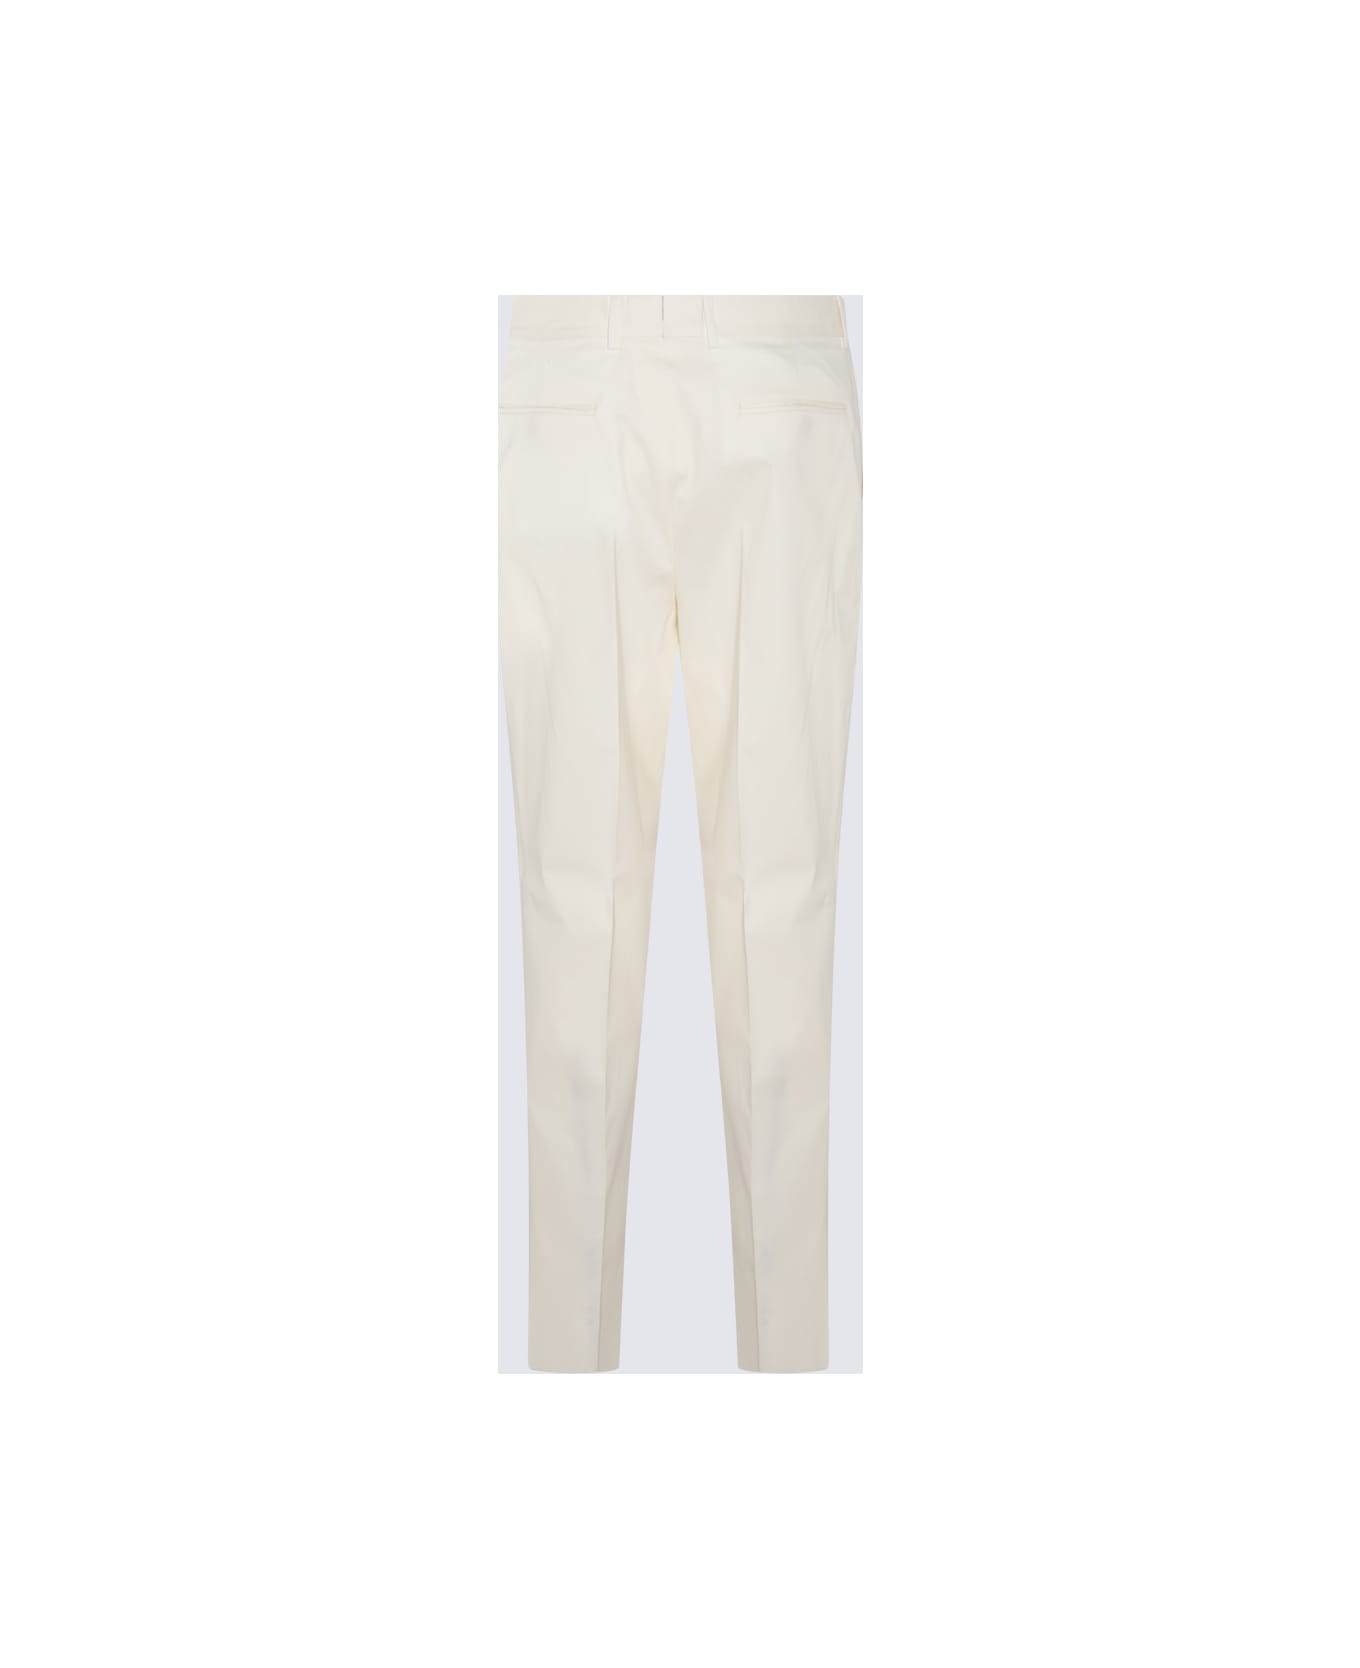 Zegna White Cotton Blend Trousers - White ボトムス